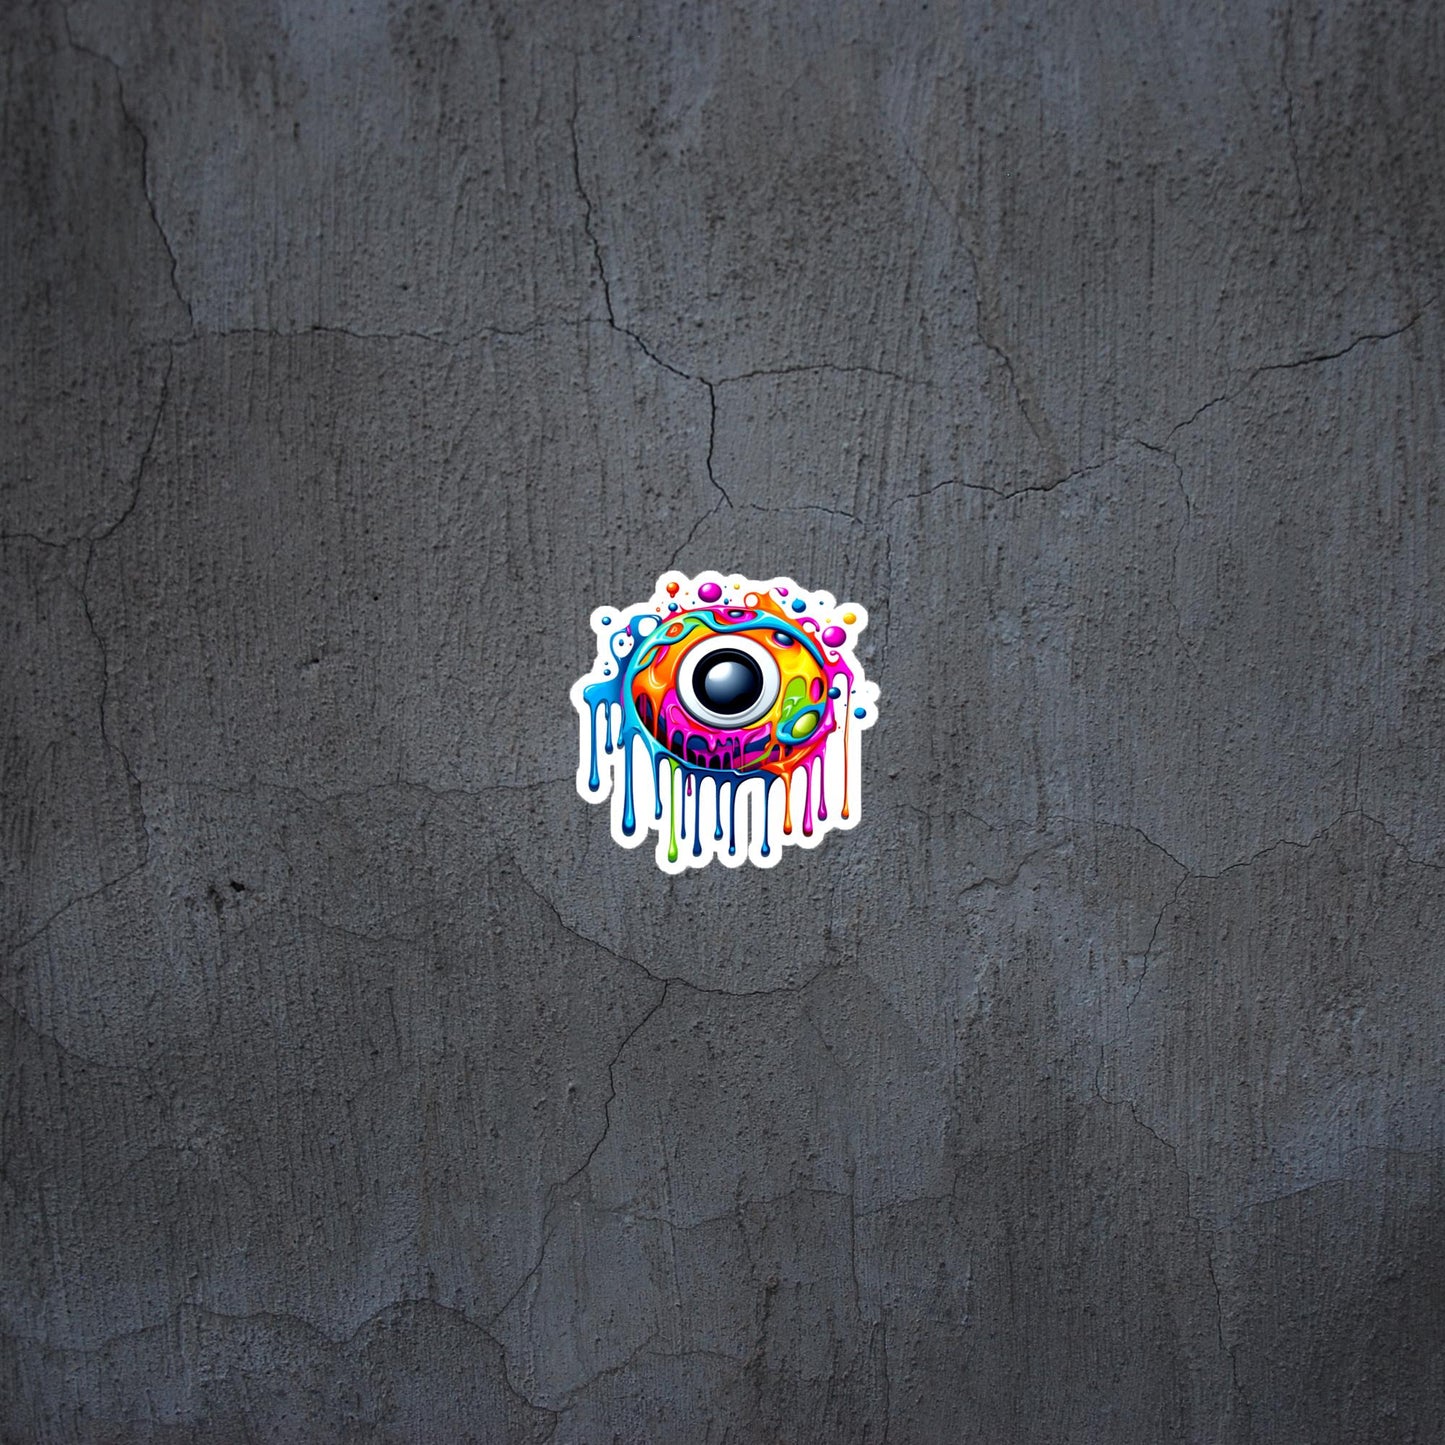 Dripping eye sticker/decal